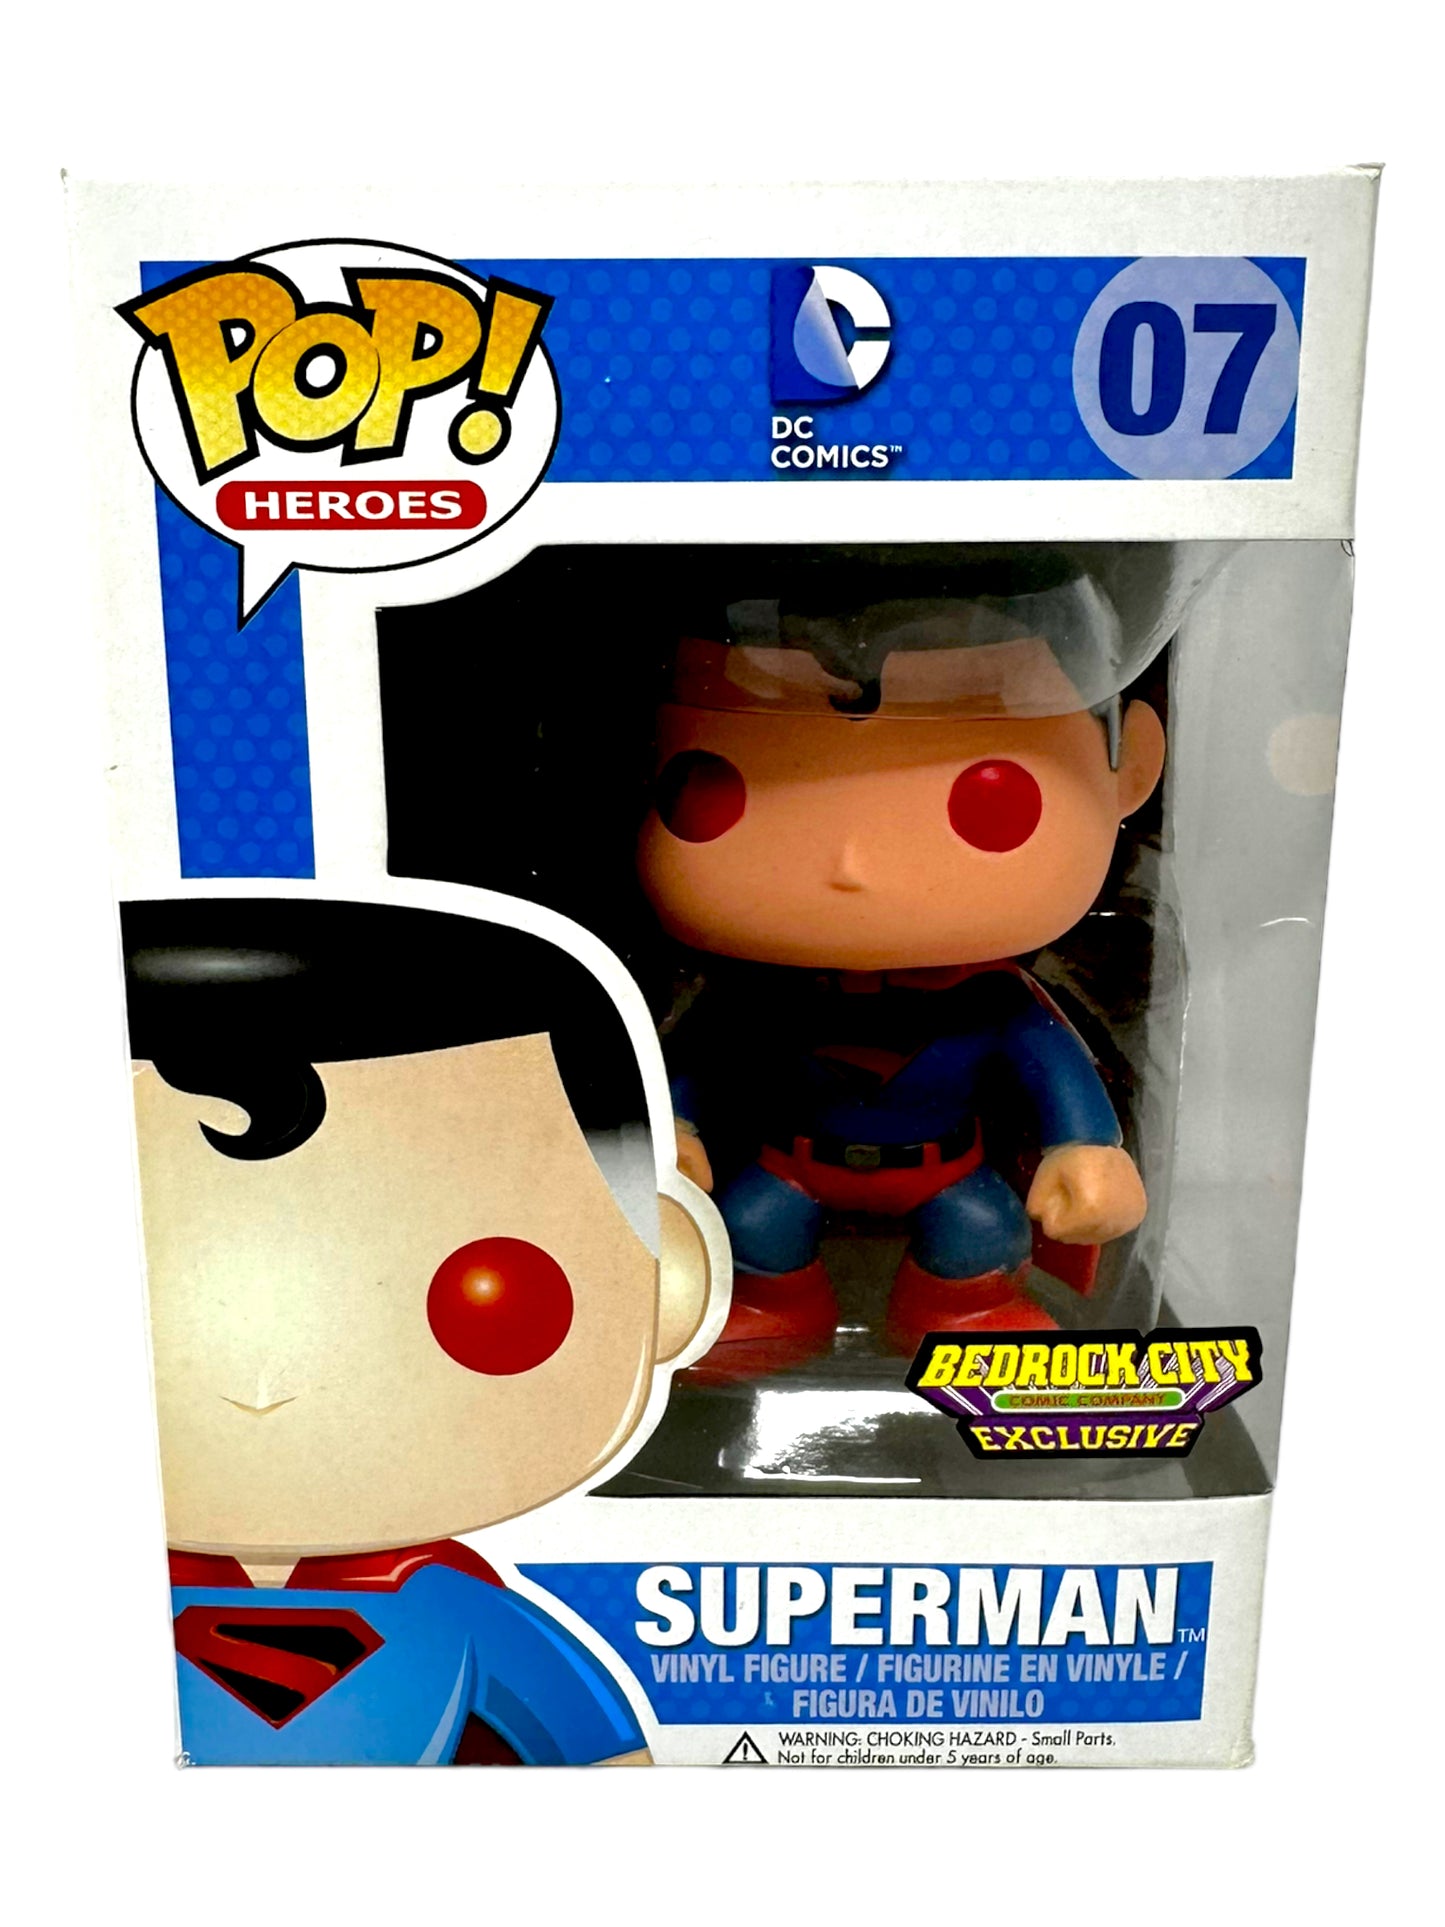 Sold 2013 Superman 07 Bedrock City Exclusive (Superman & The Authority #1)